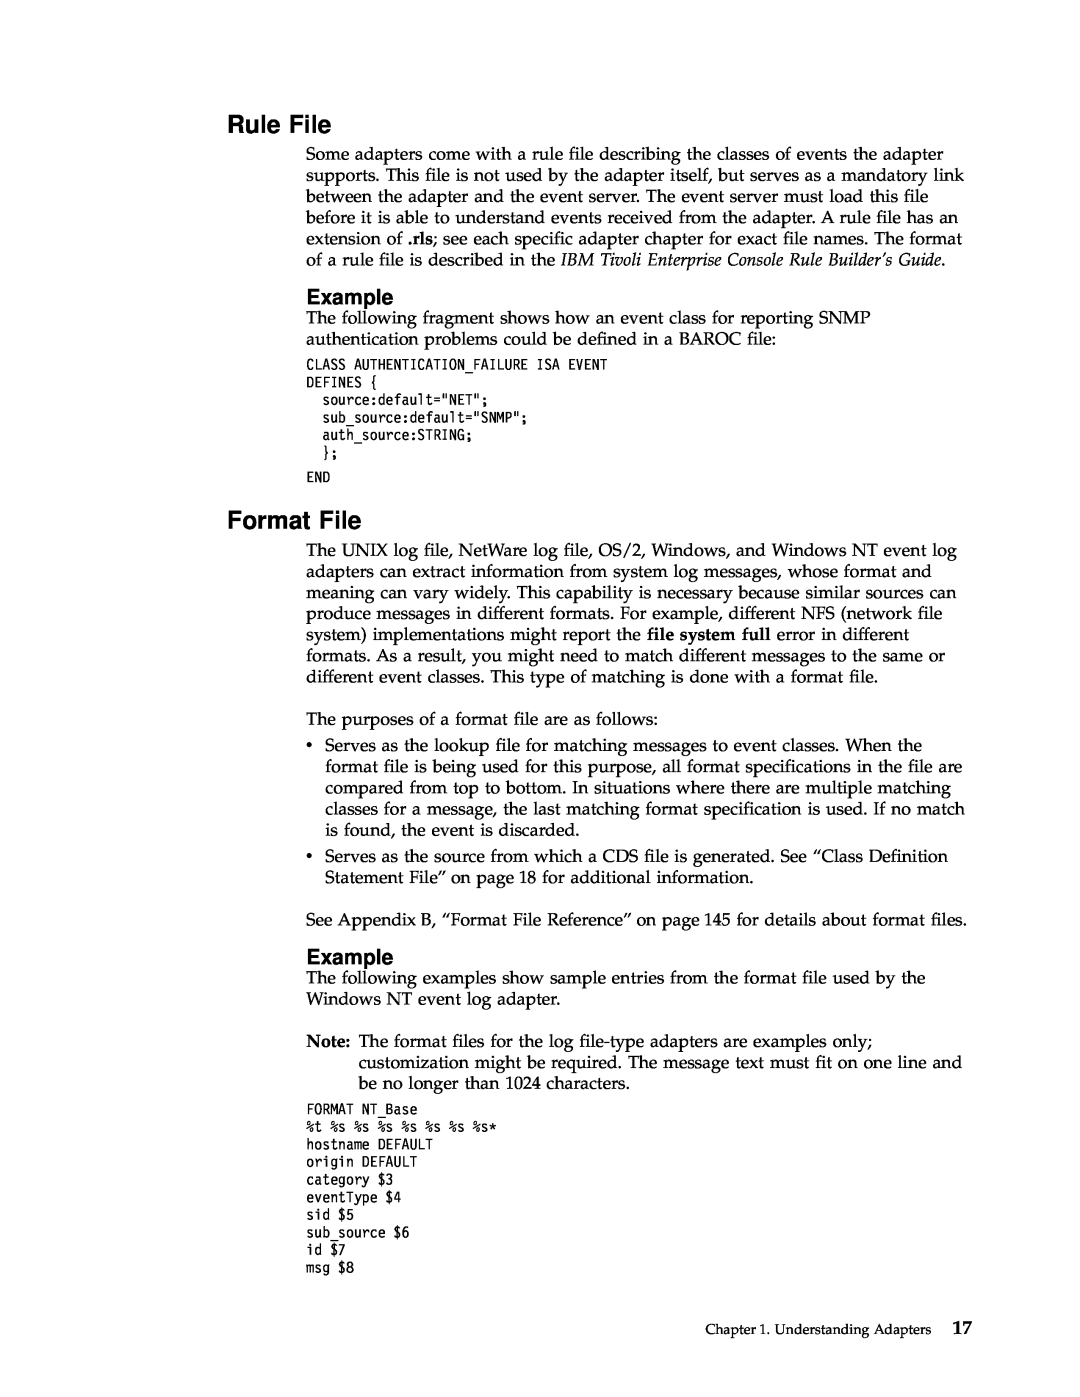 IBM Enterprise Console manual Rule File, Format File, Example 